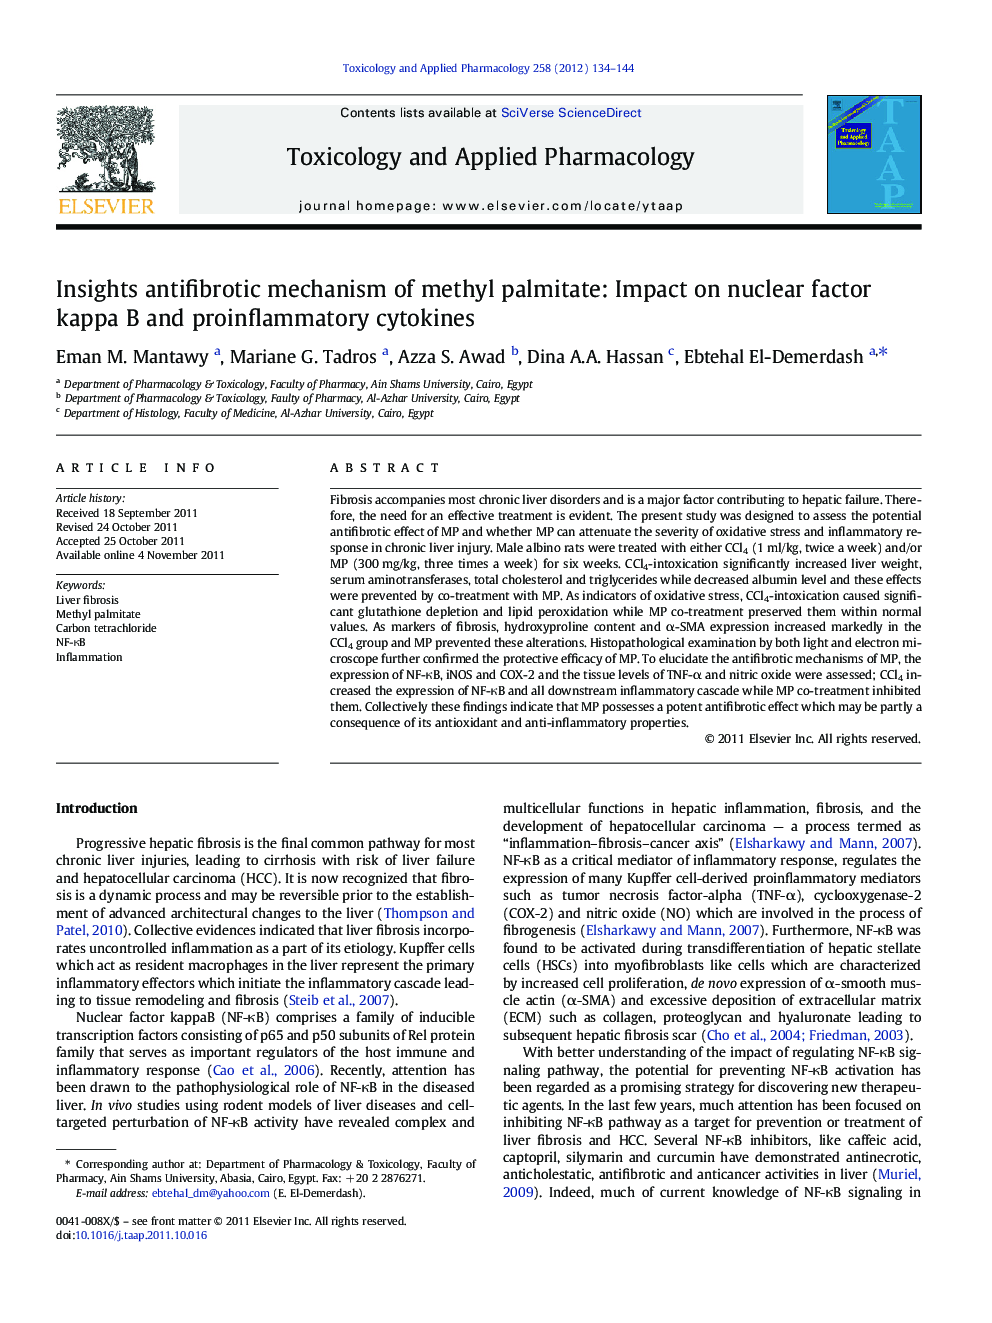 Insights antifibrotic mechanism of methyl palmitate: Impact on nuclear factor kappa B and proinflammatory cytokines